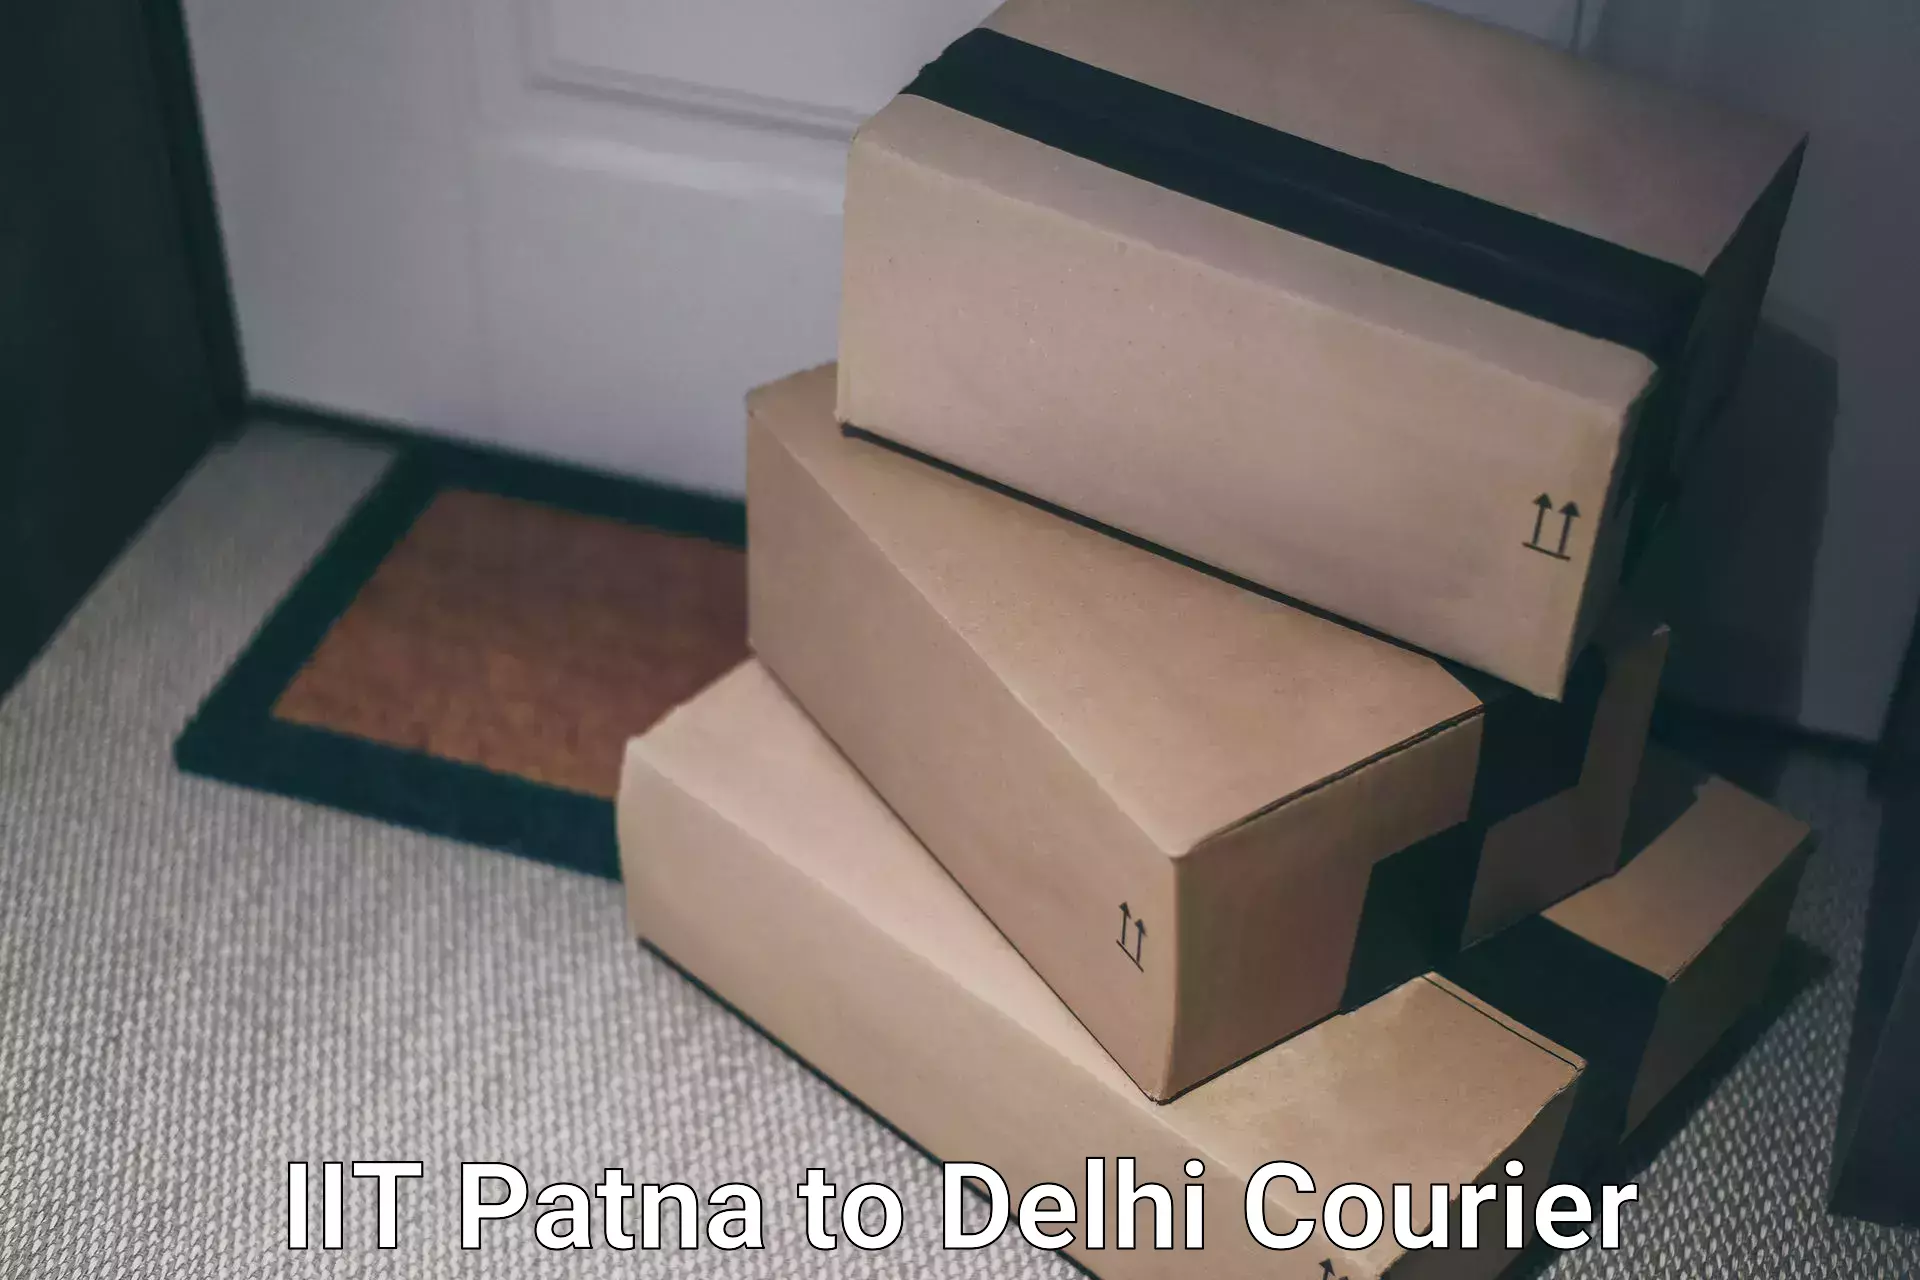 Next day courier IIT Patna to Delhi